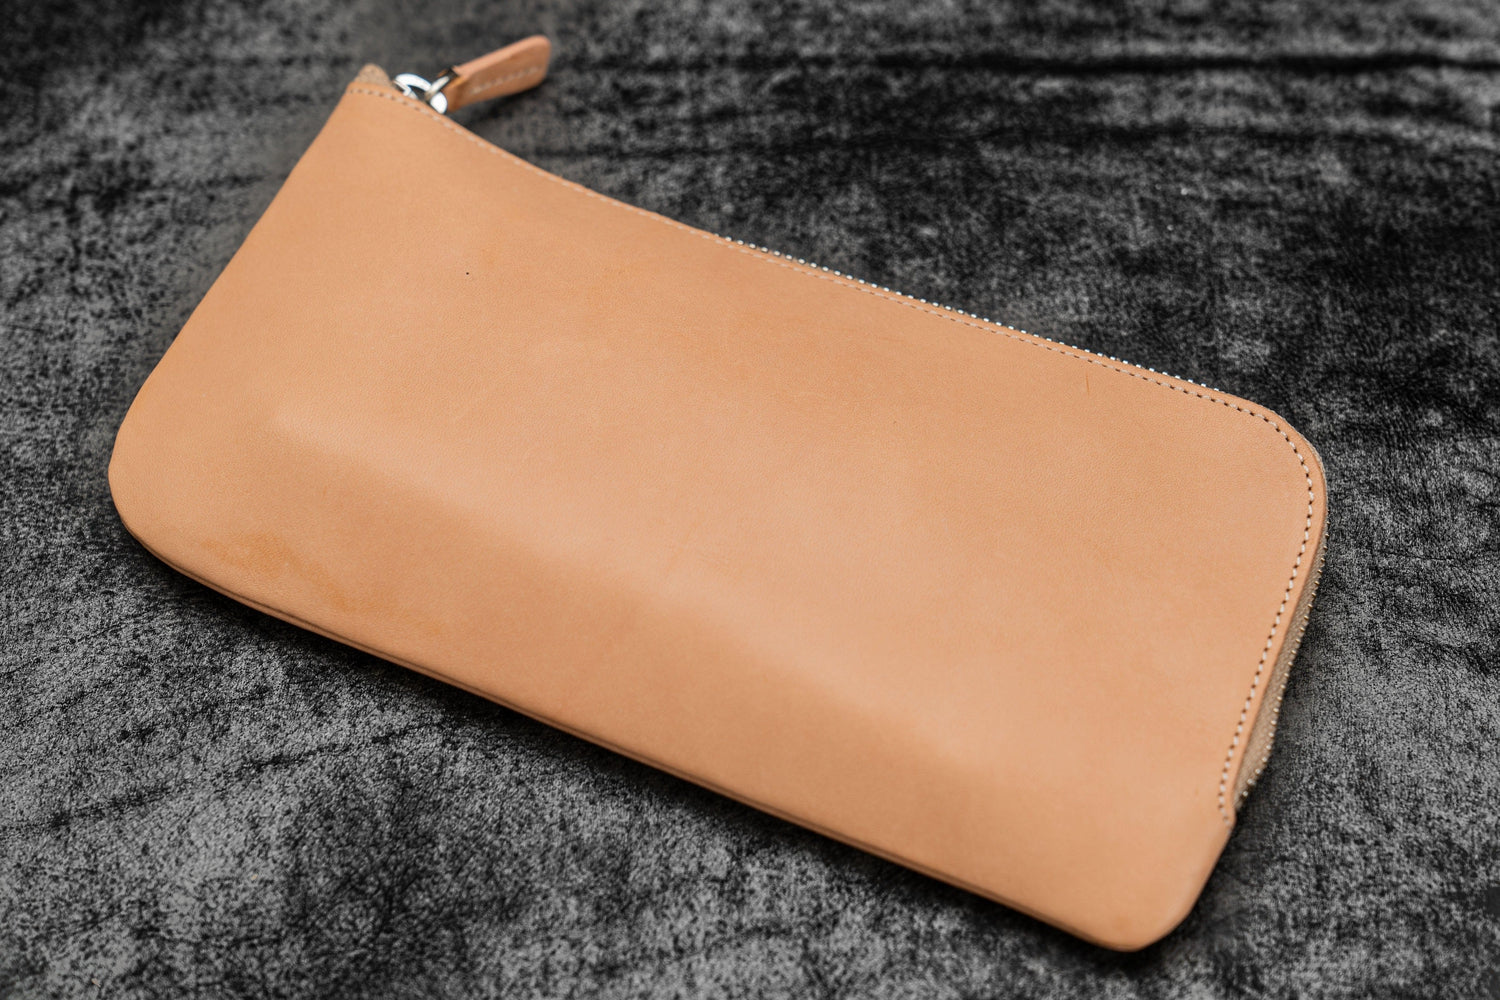 Luxury Wristlet Clutch Bag  Small Zip Pouch Bag w. Card Slots